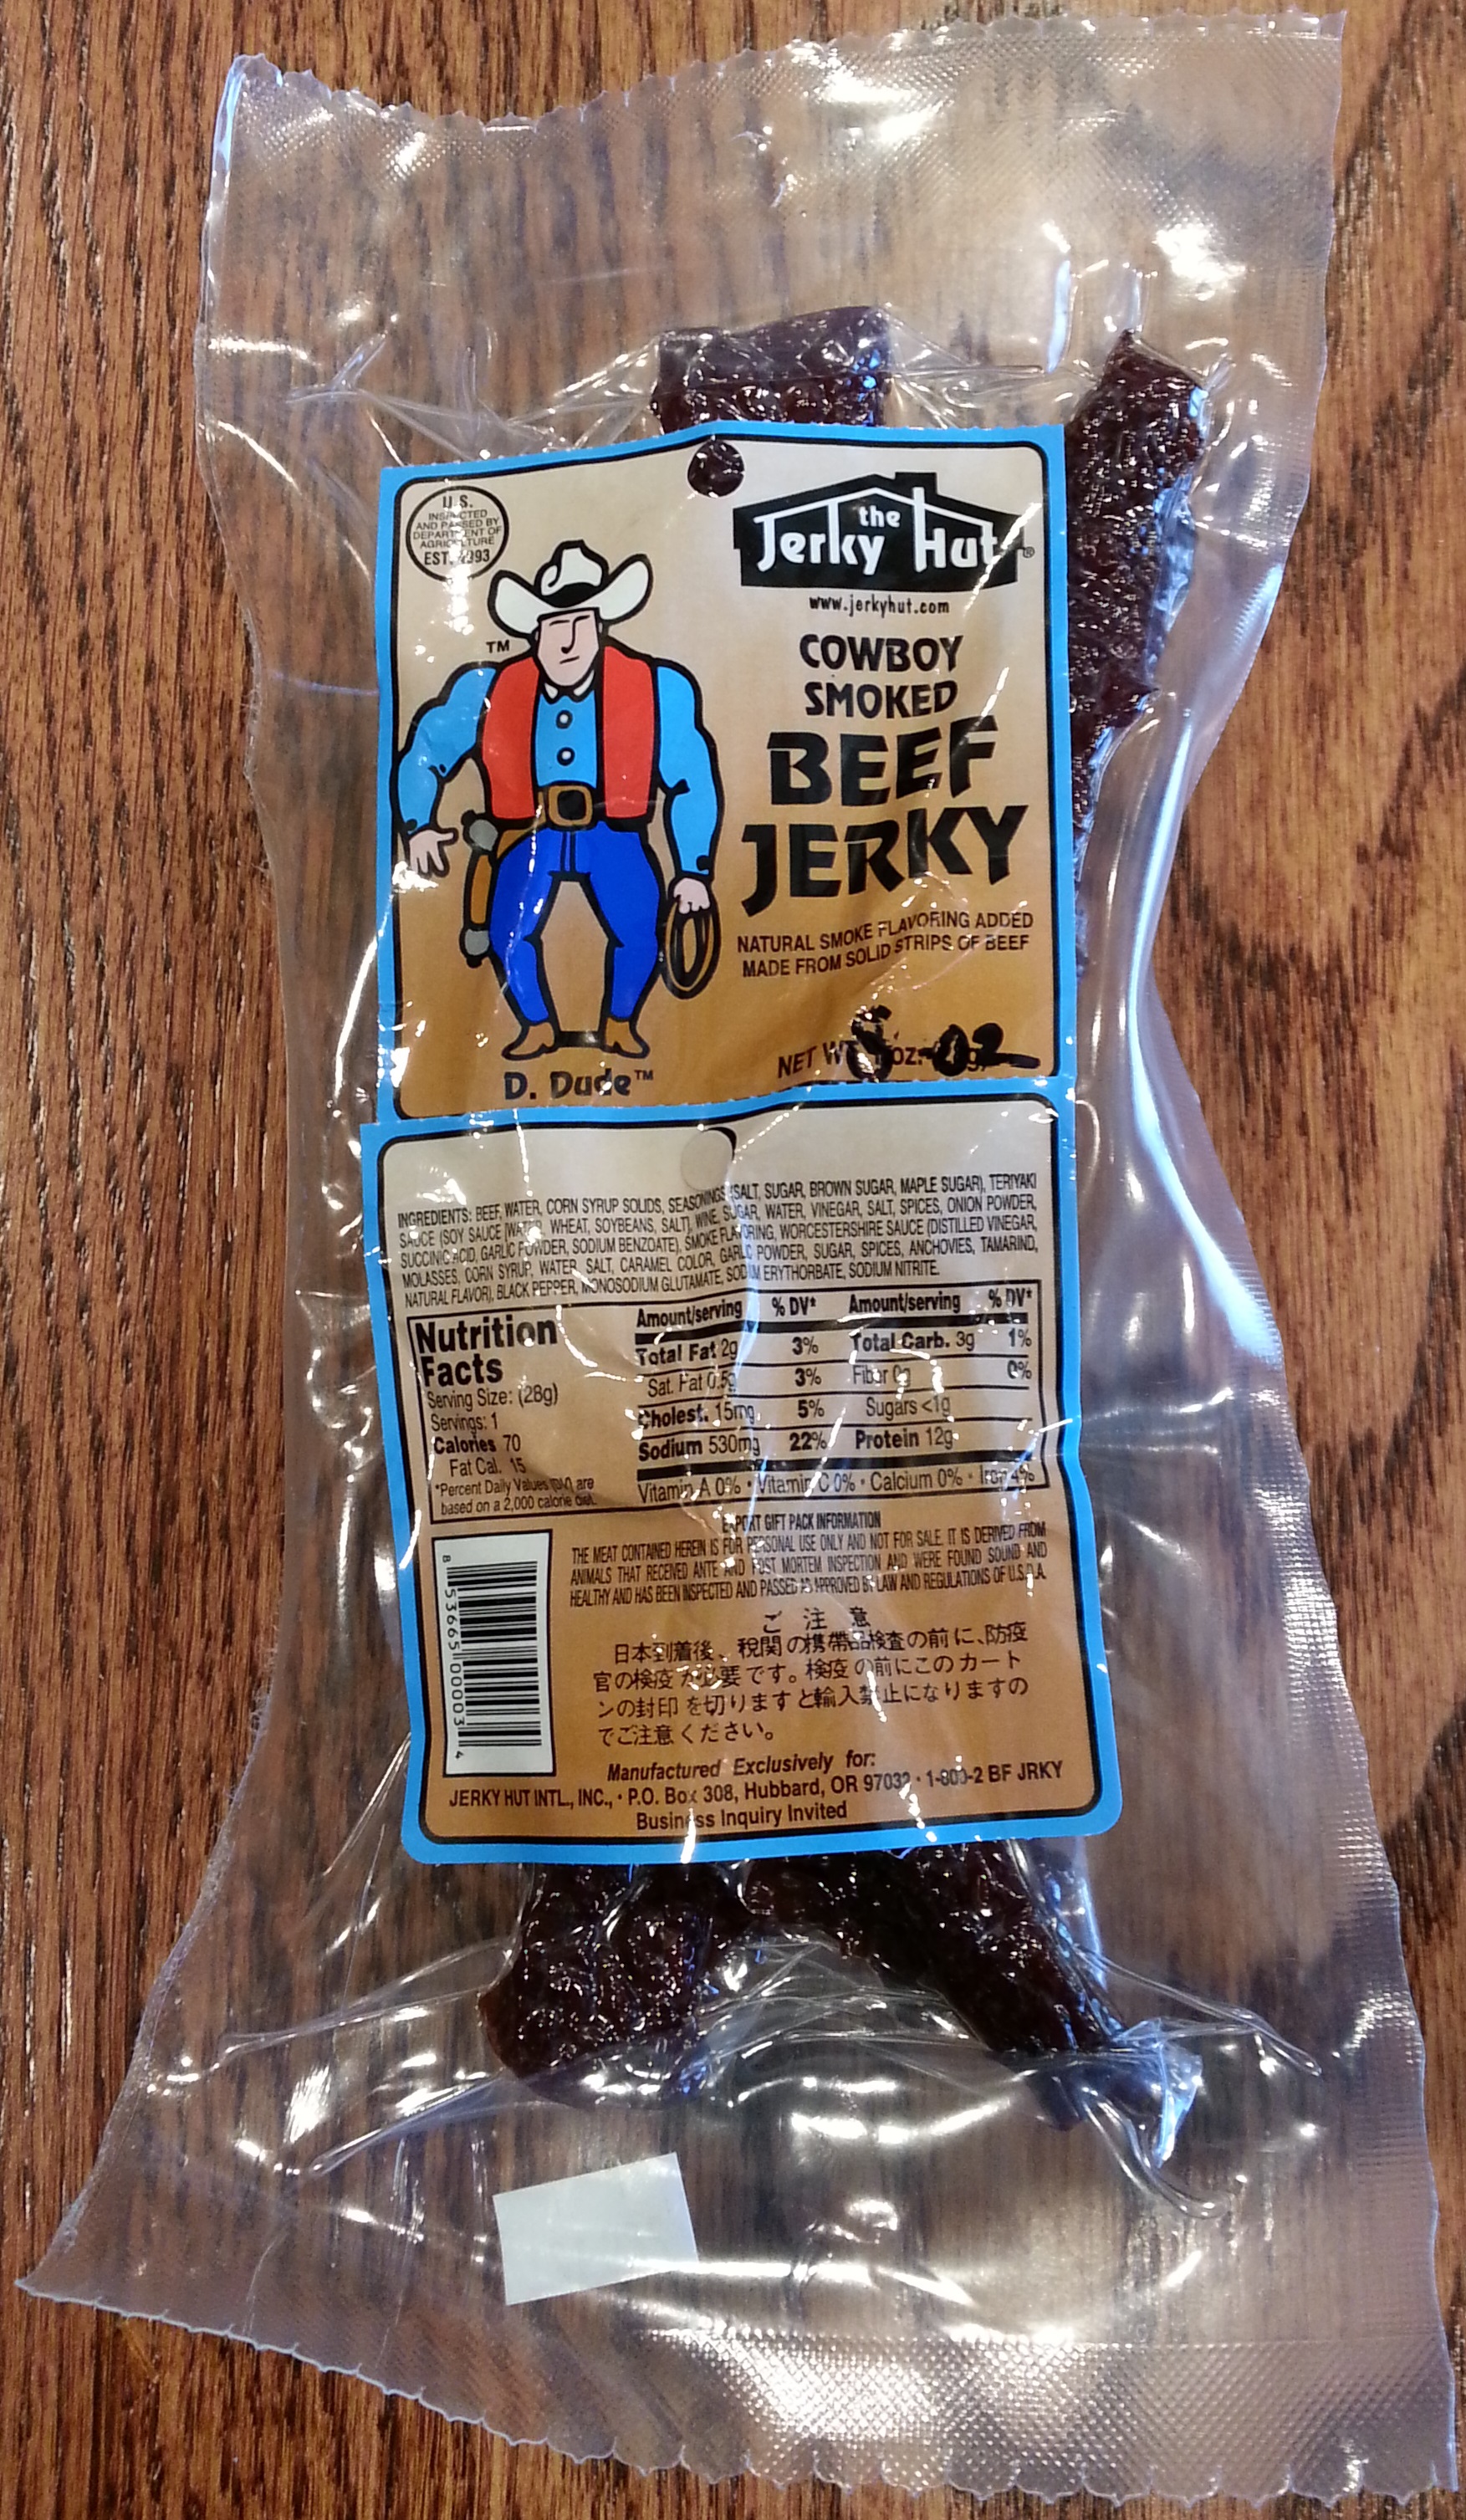 The Jerky Hut Cowboy Smoked Beef Jerky